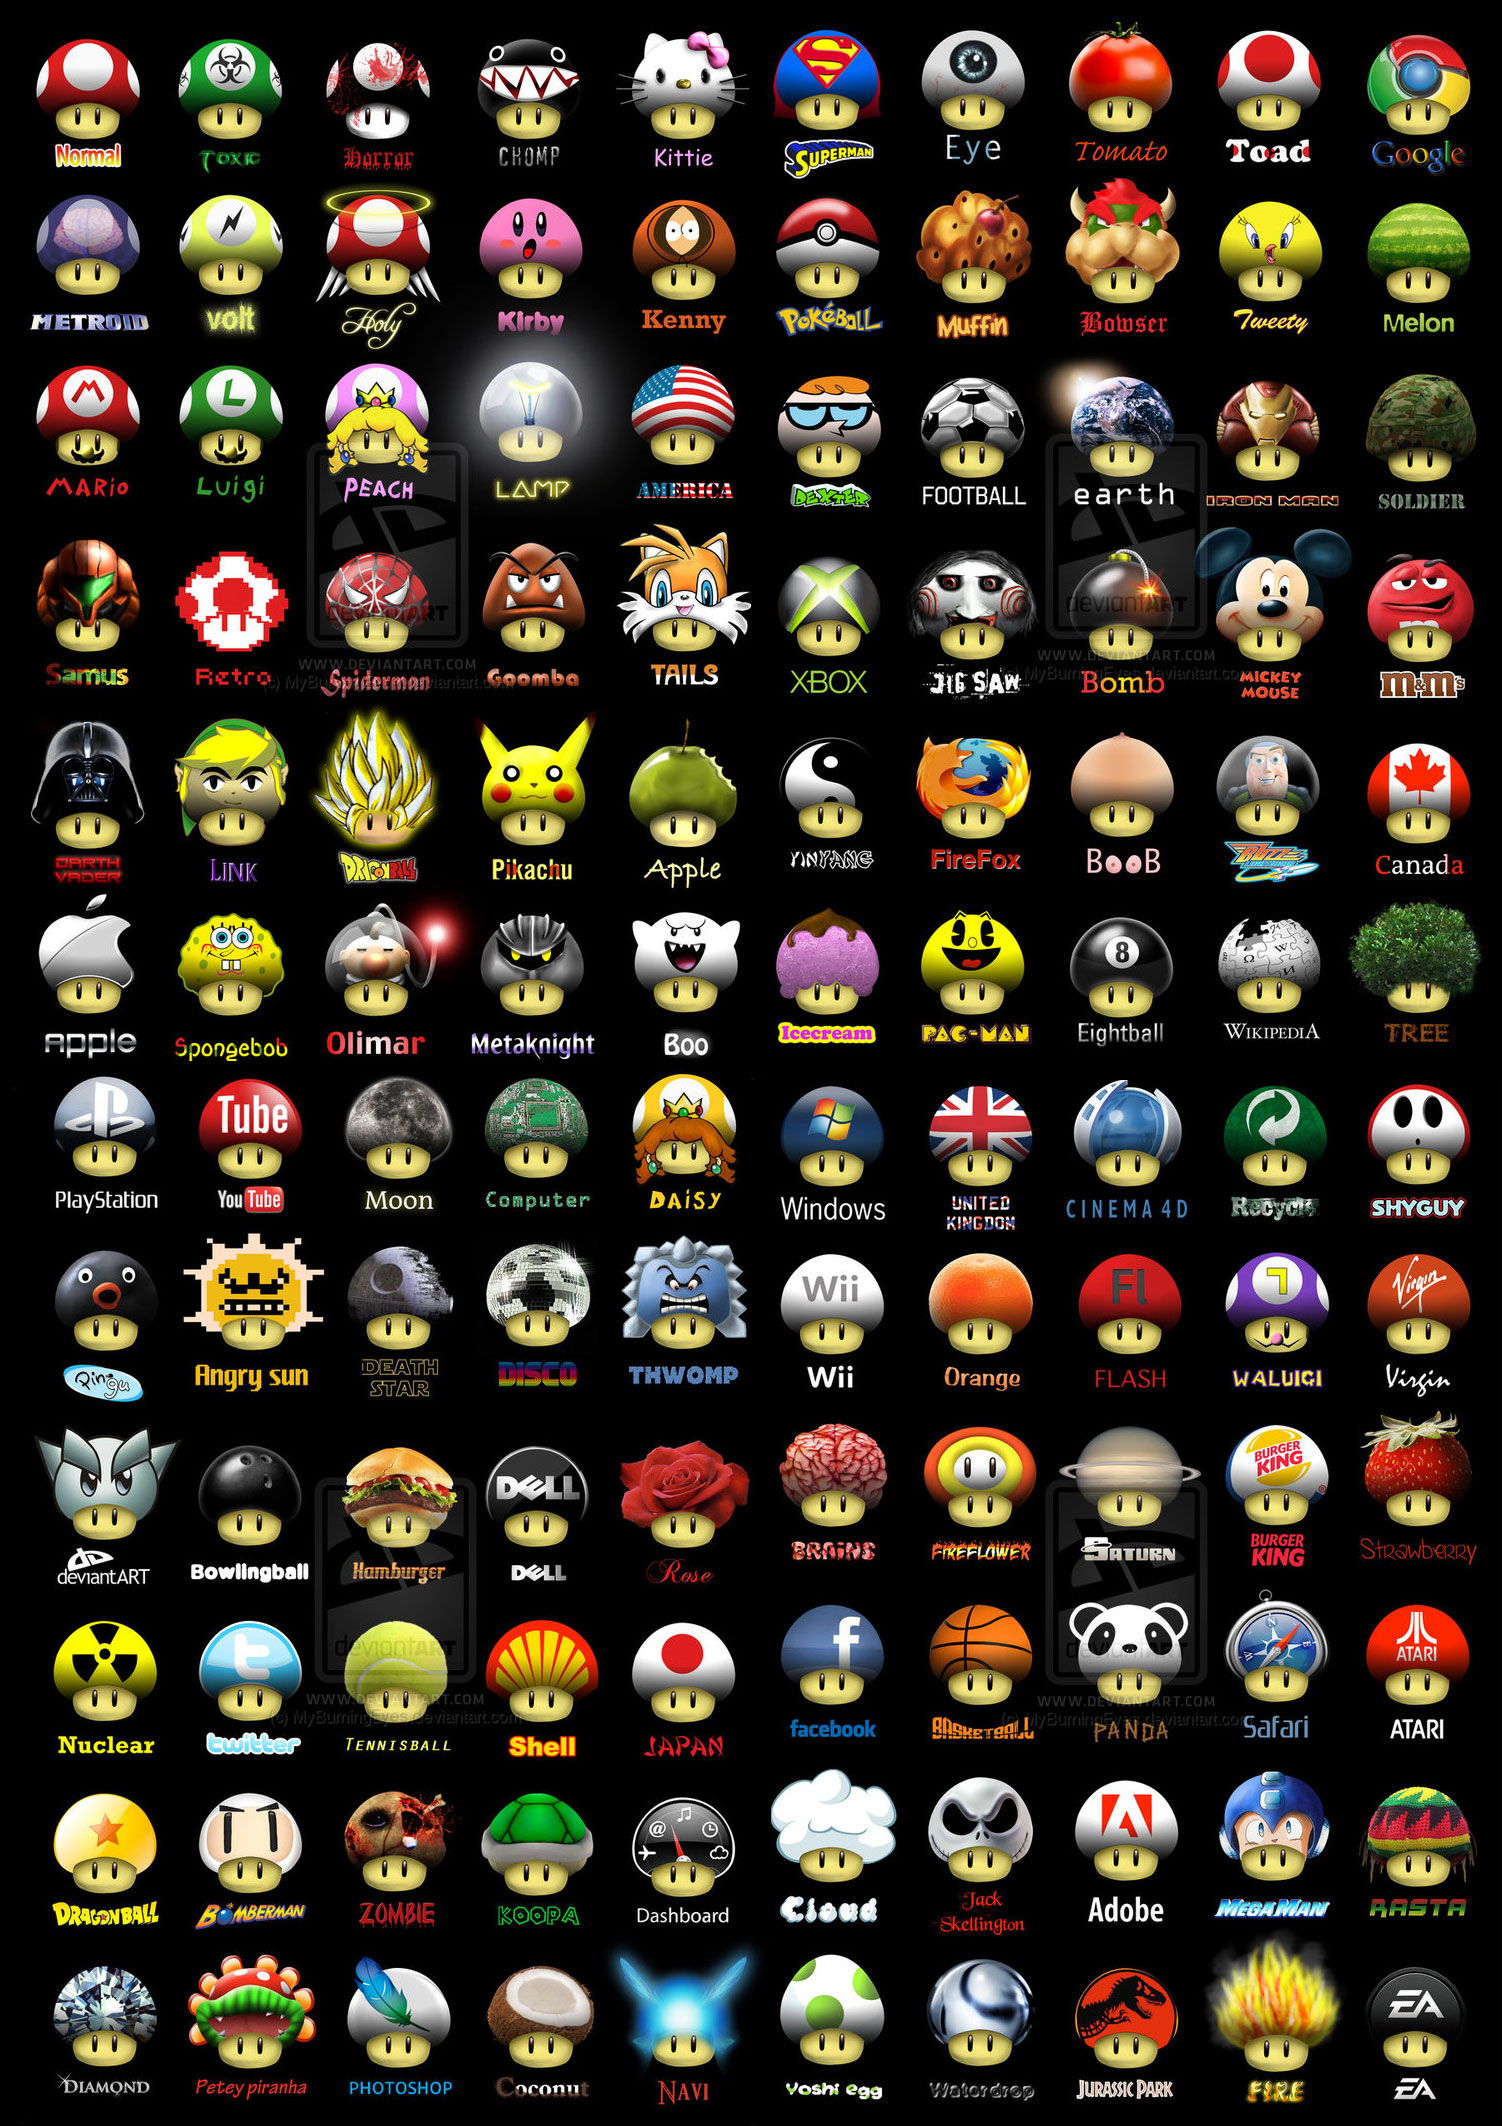 Different kinds of mushrooms - Super Mario Bros. Fan Art (32419815 ...